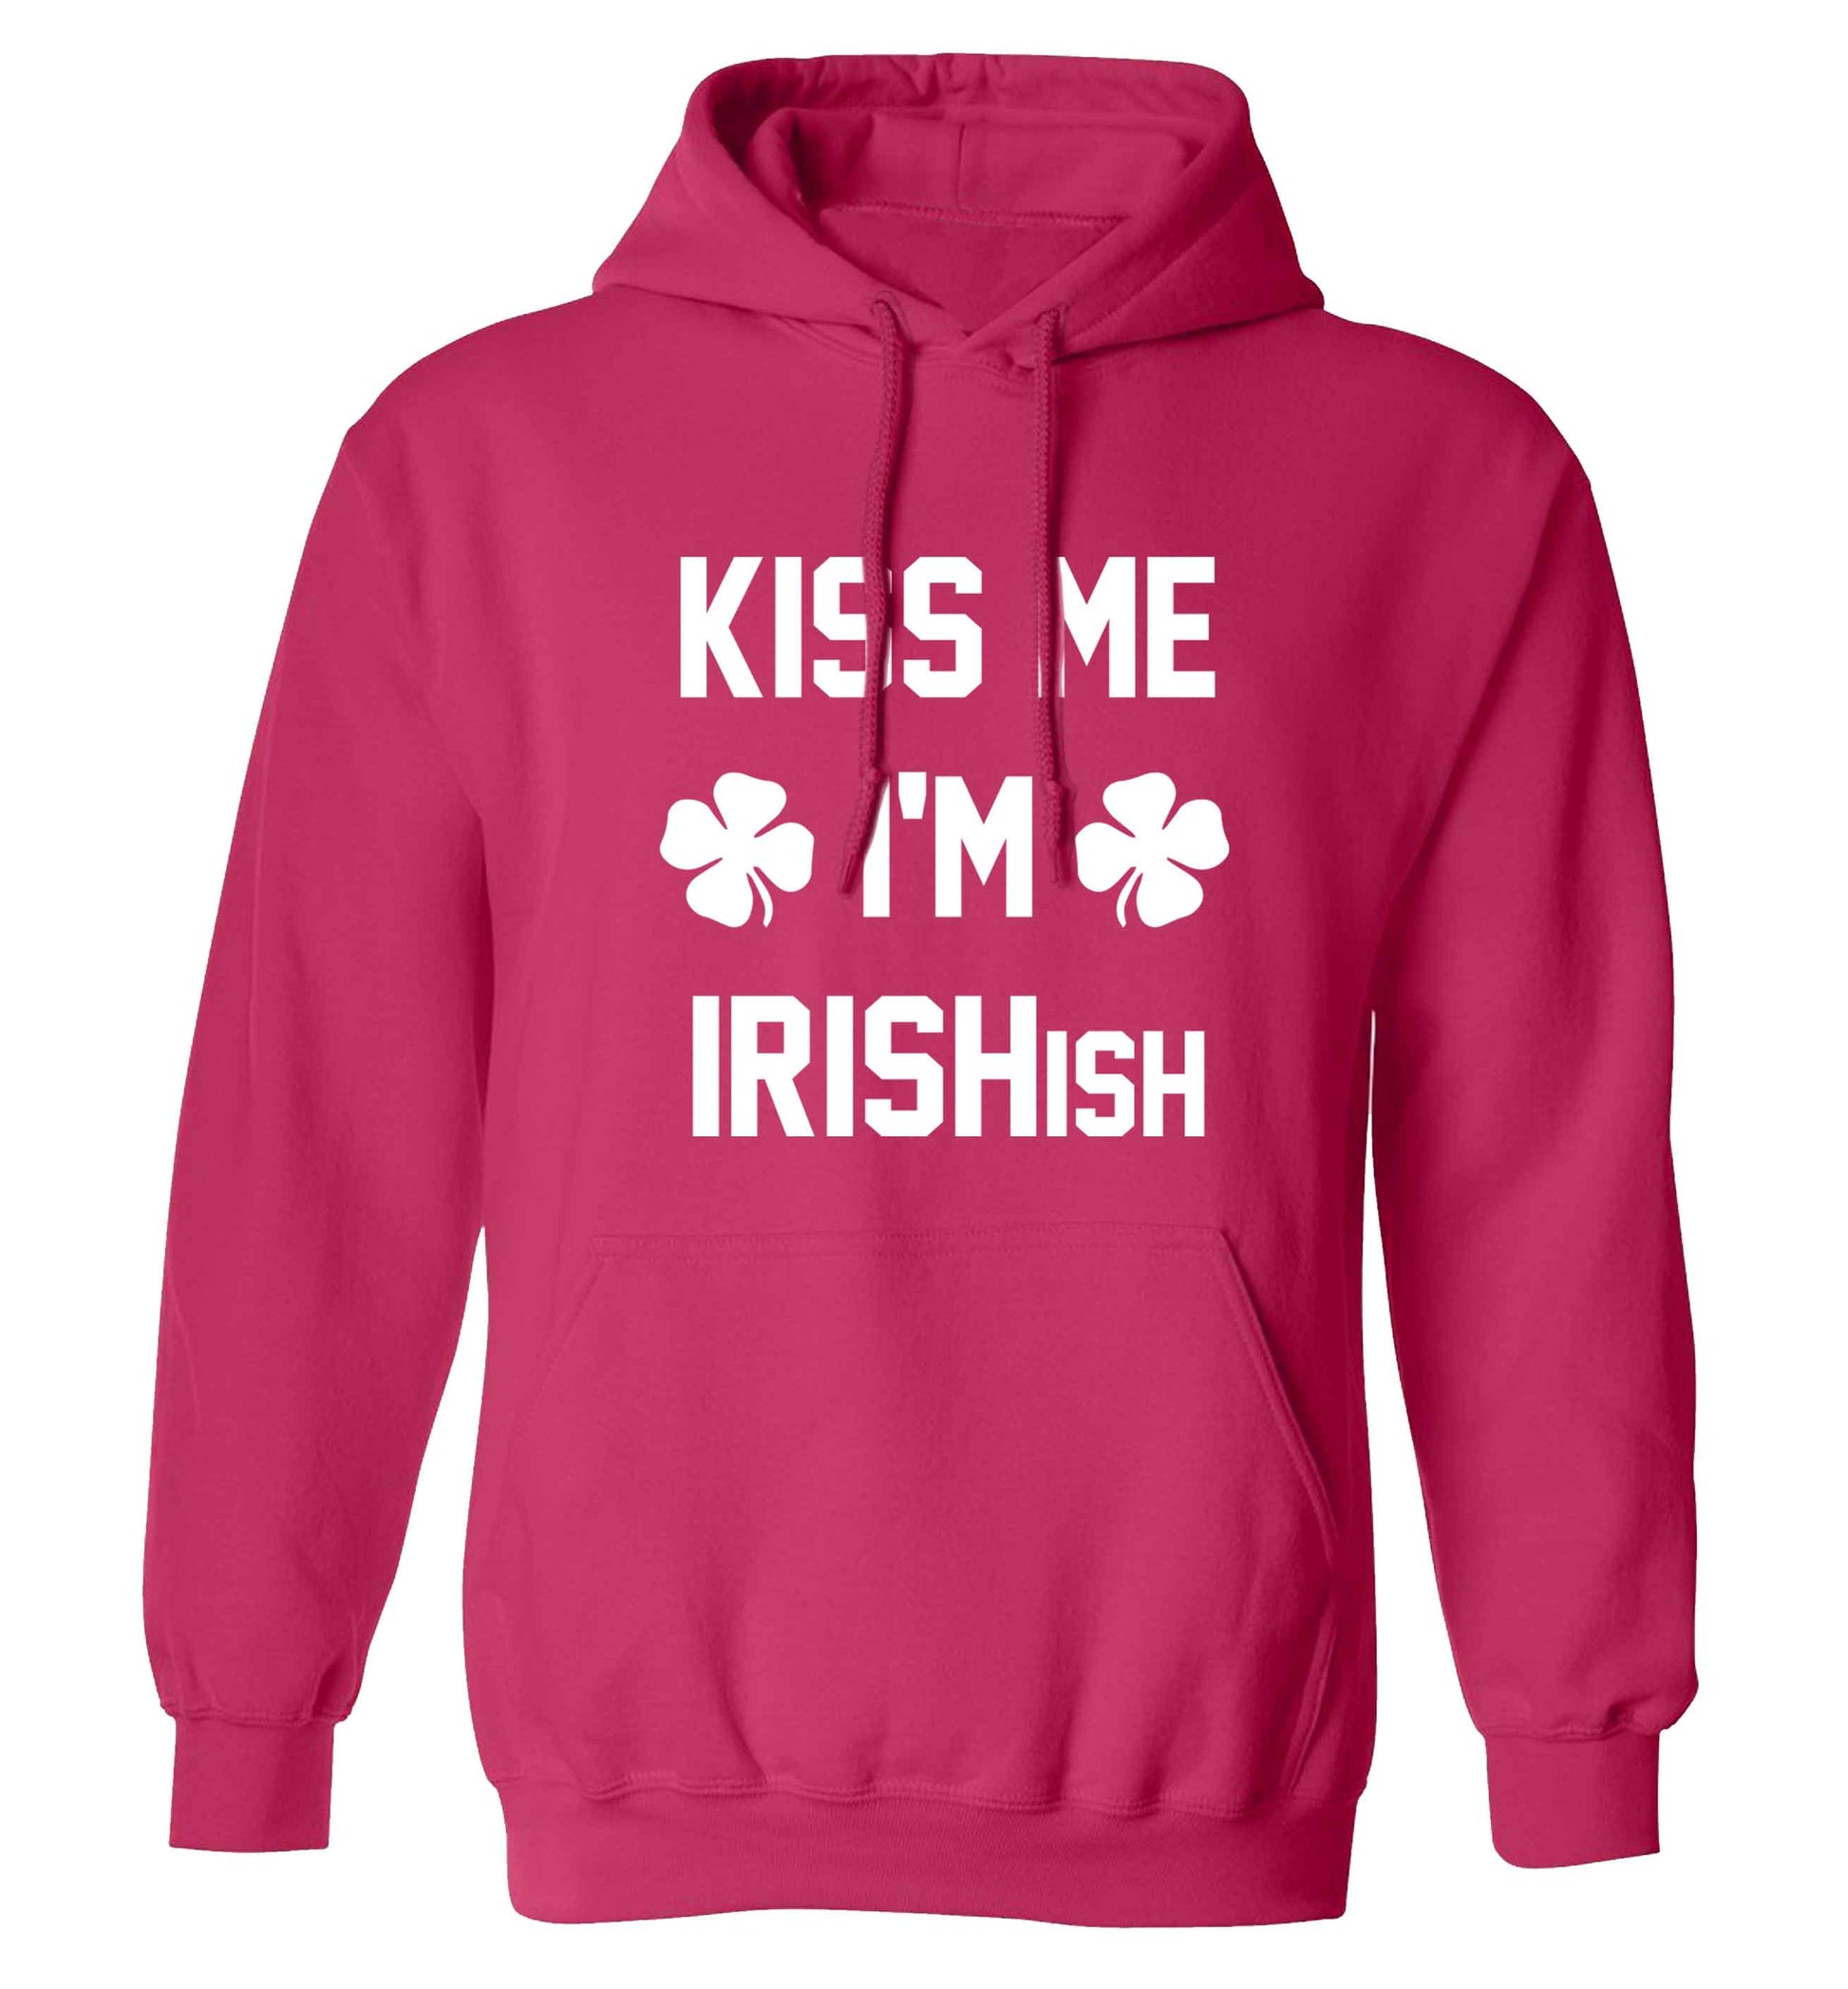 Kiss me I'm Irishish adults unisex pink hoodie 2XL